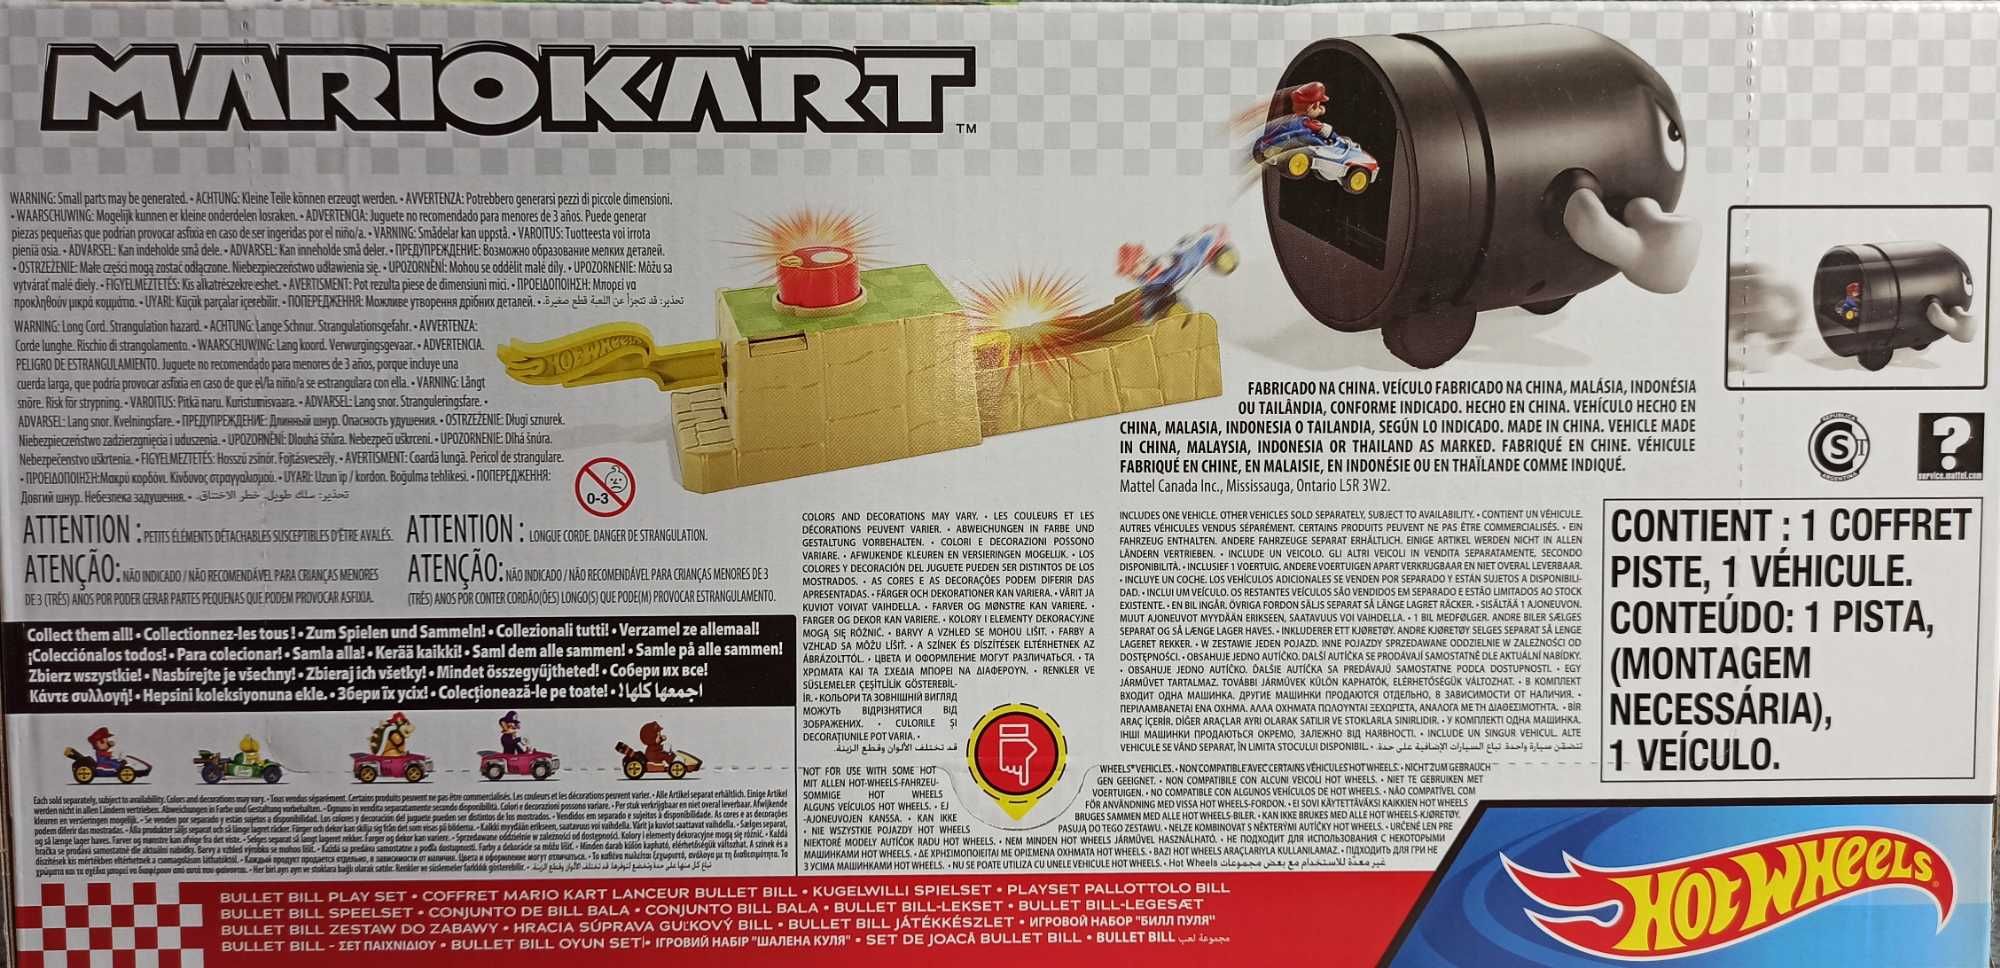 Hot Wheels Mario Kart Bullet Bill Zestaw do zabawy GKY54